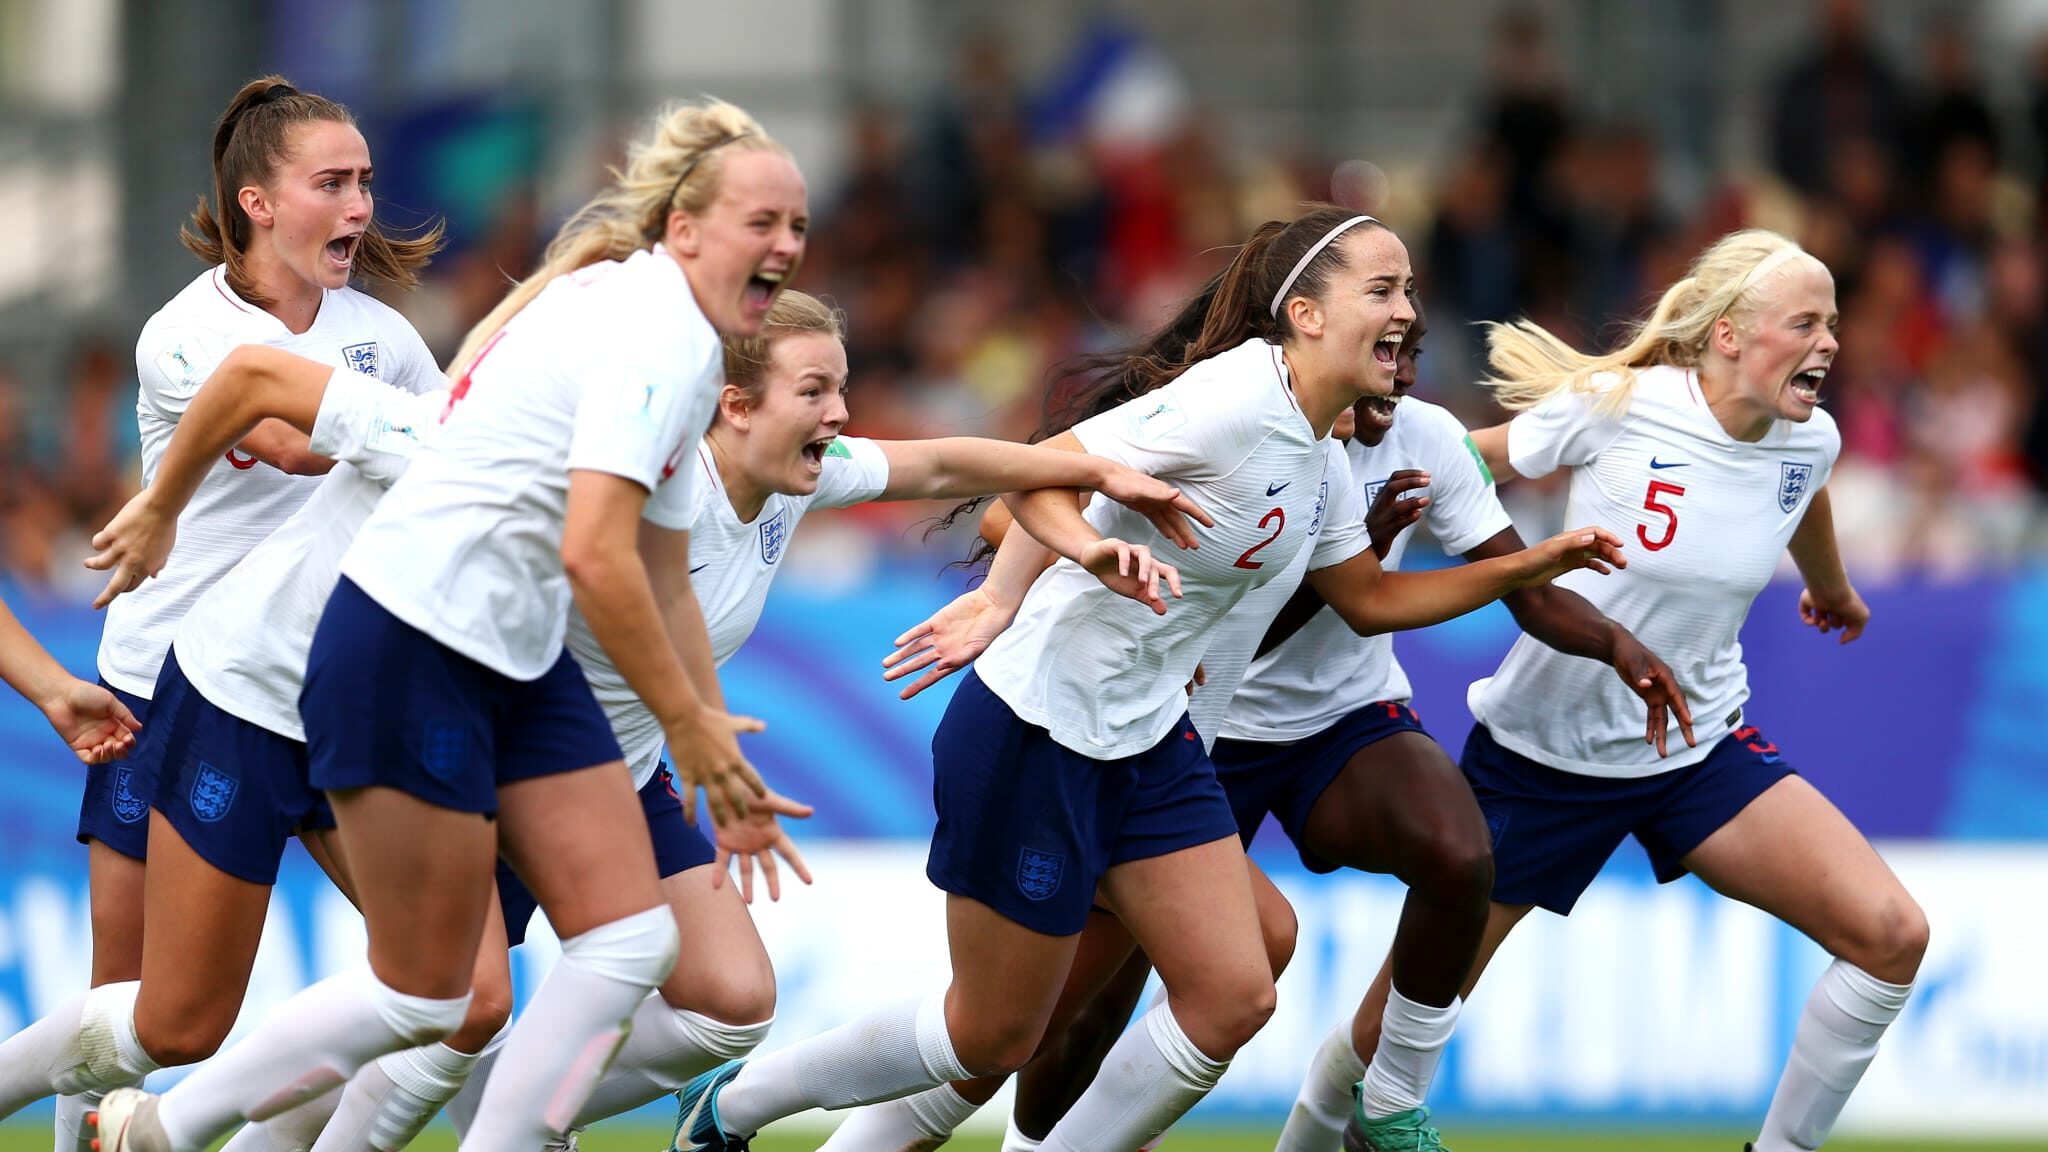 Inglesas celebrando el tercer lugar en Francia 2019 rivales Chile JJOO